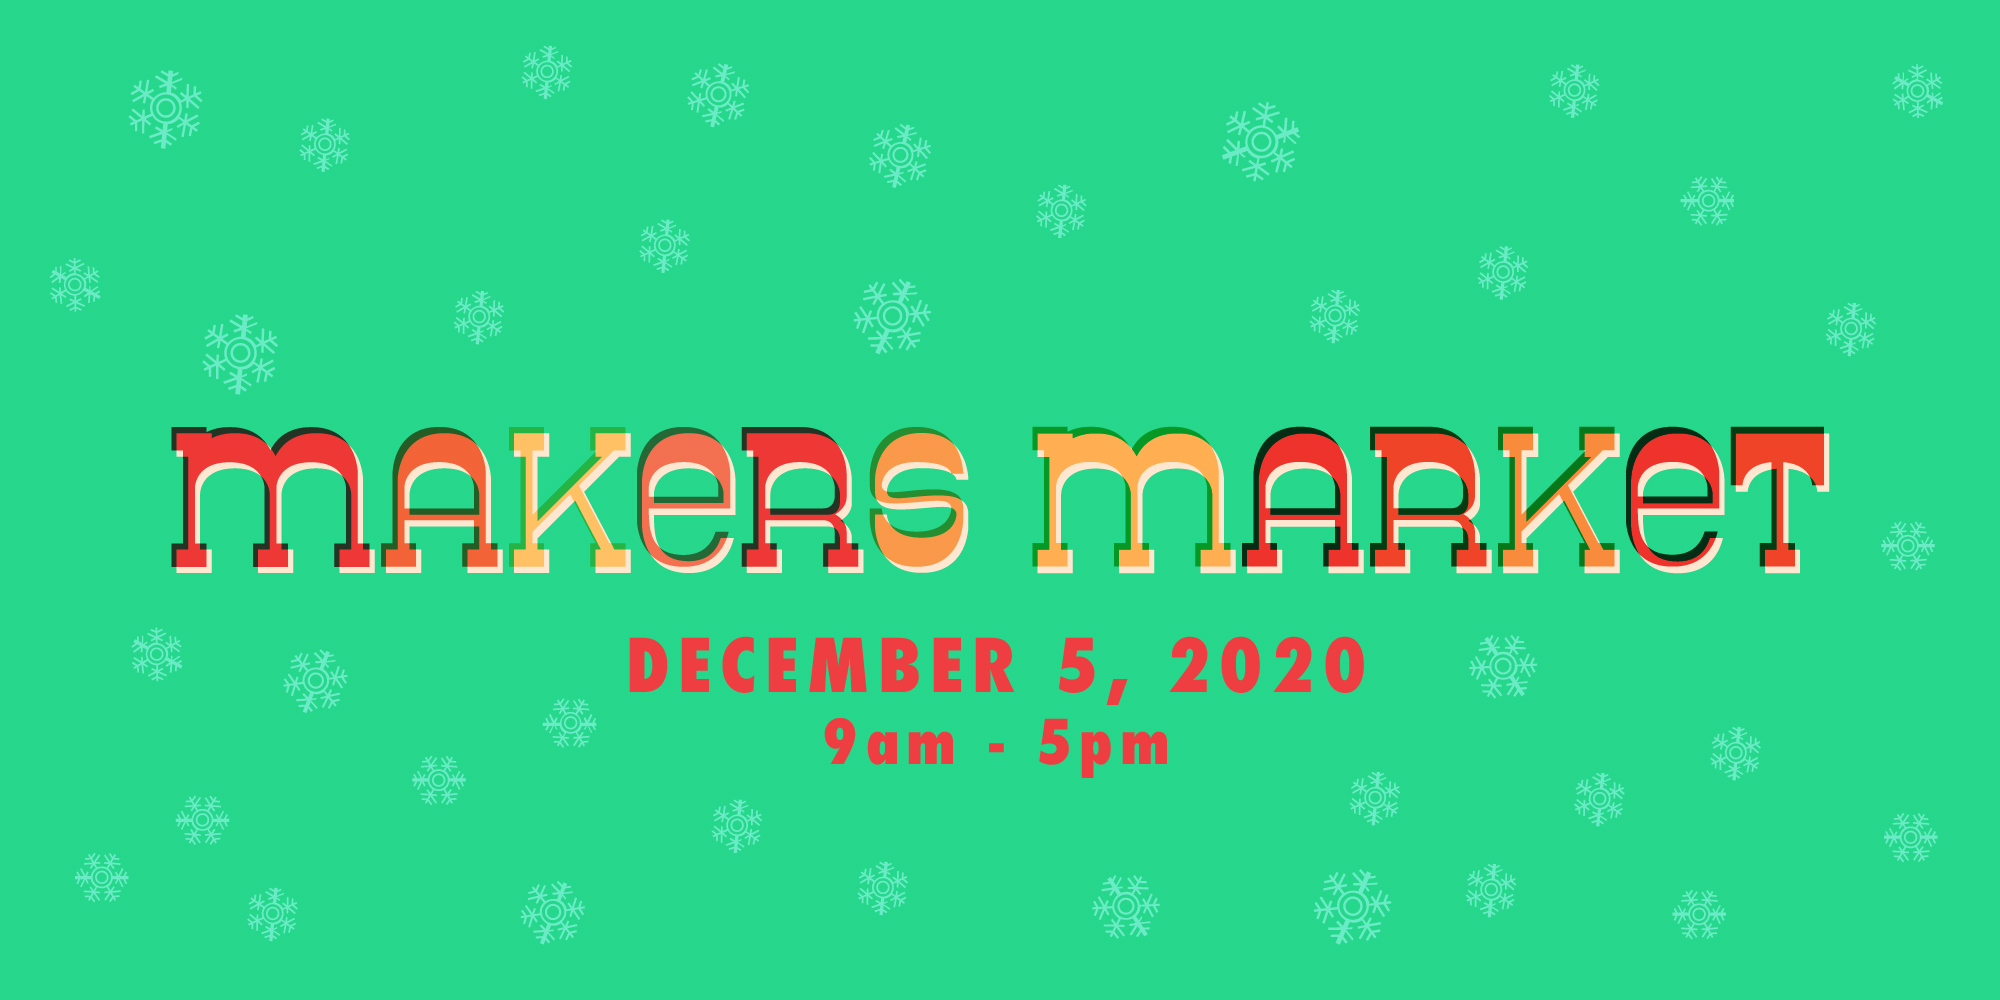 Makers Market promotional image